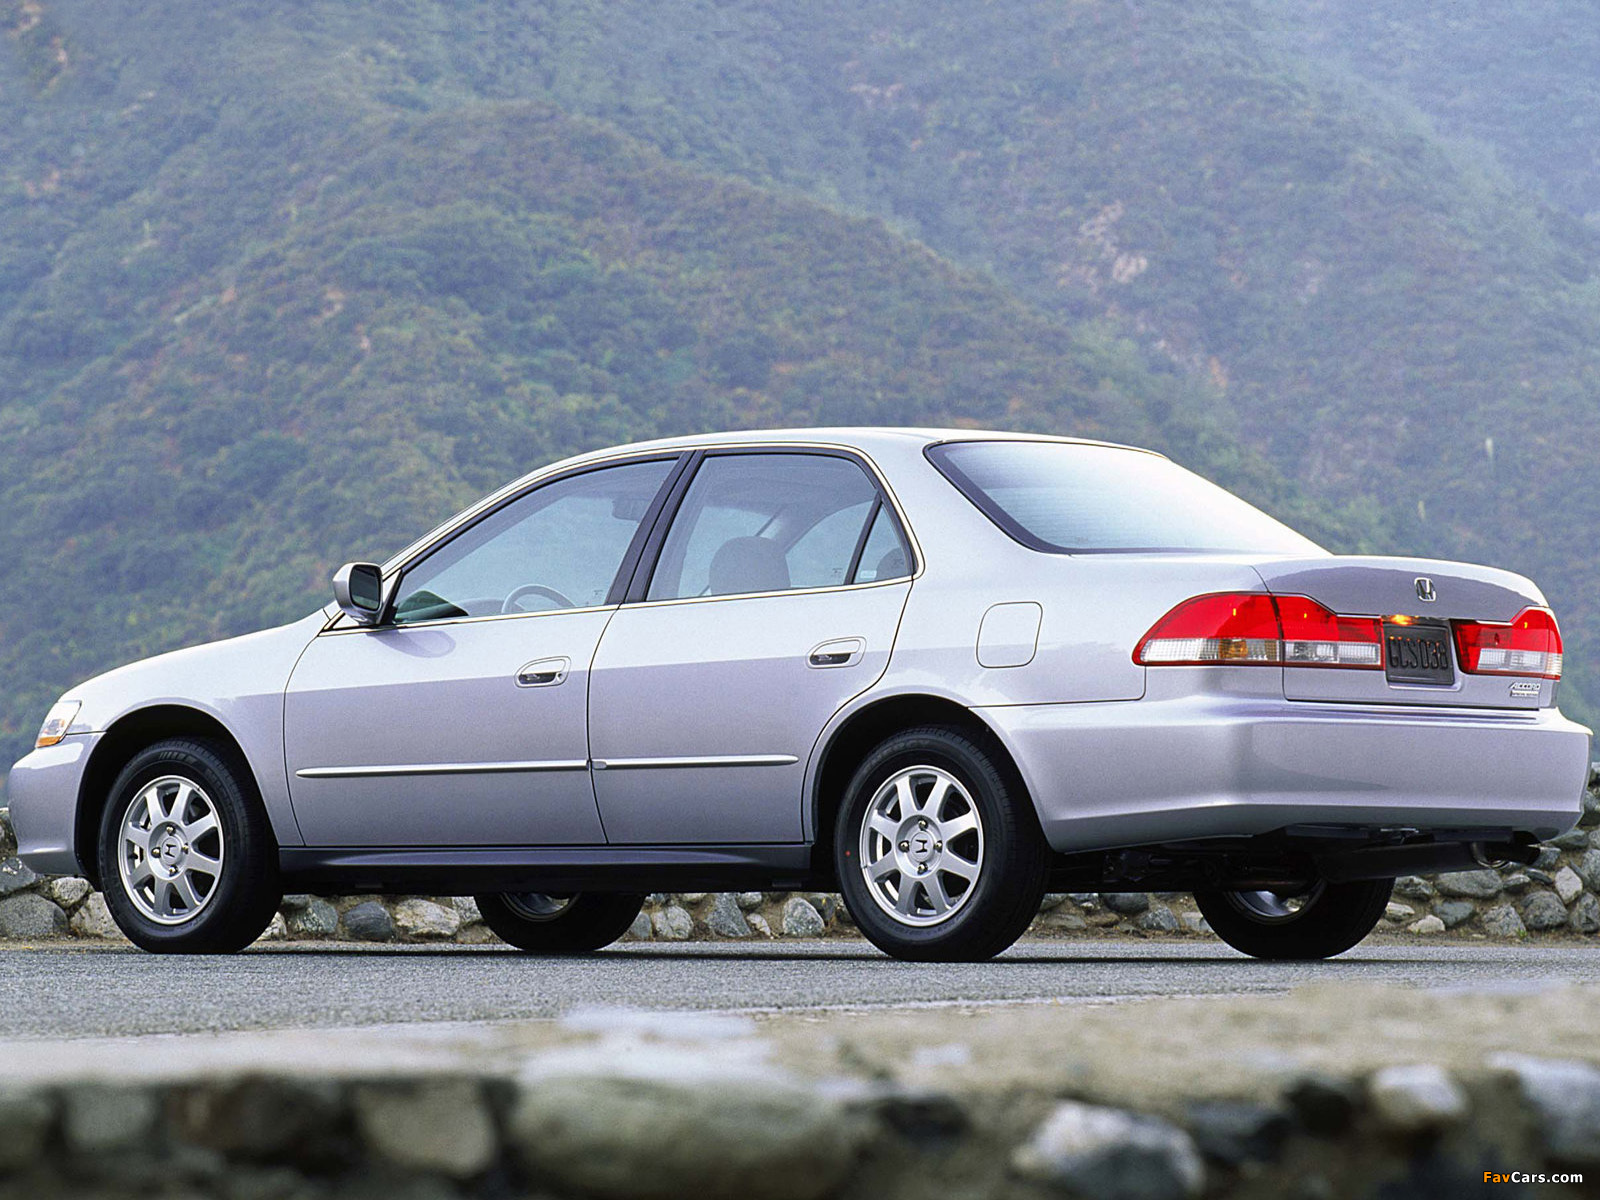 Honda Accord Sedan USspec 19982002 images (1600x1200)